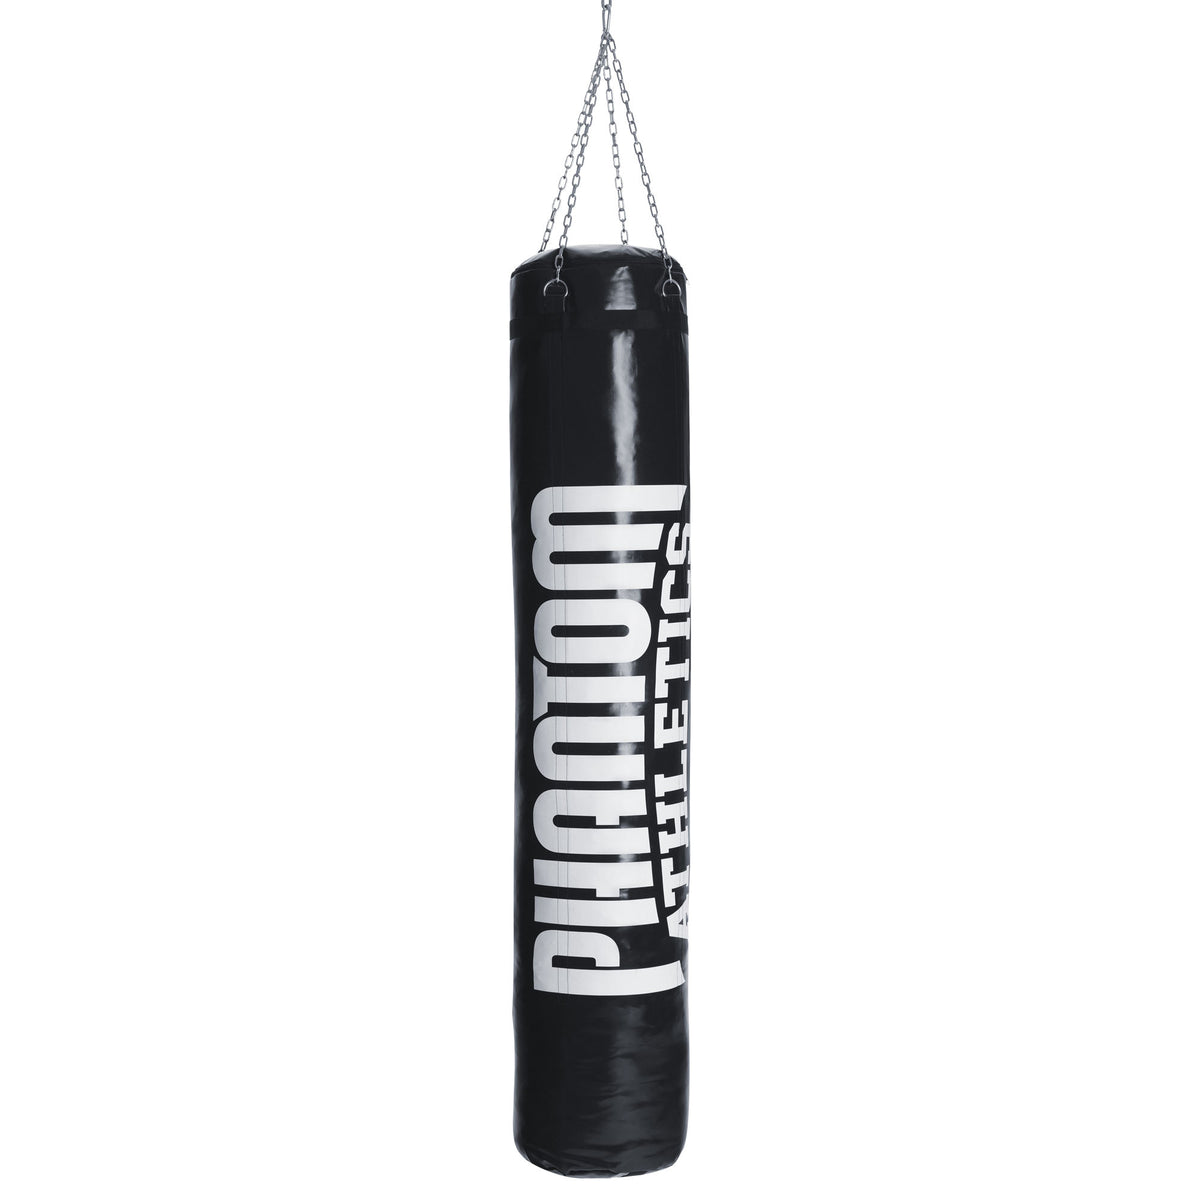 Phantom High Performance punching bag for martial arts in 180cm